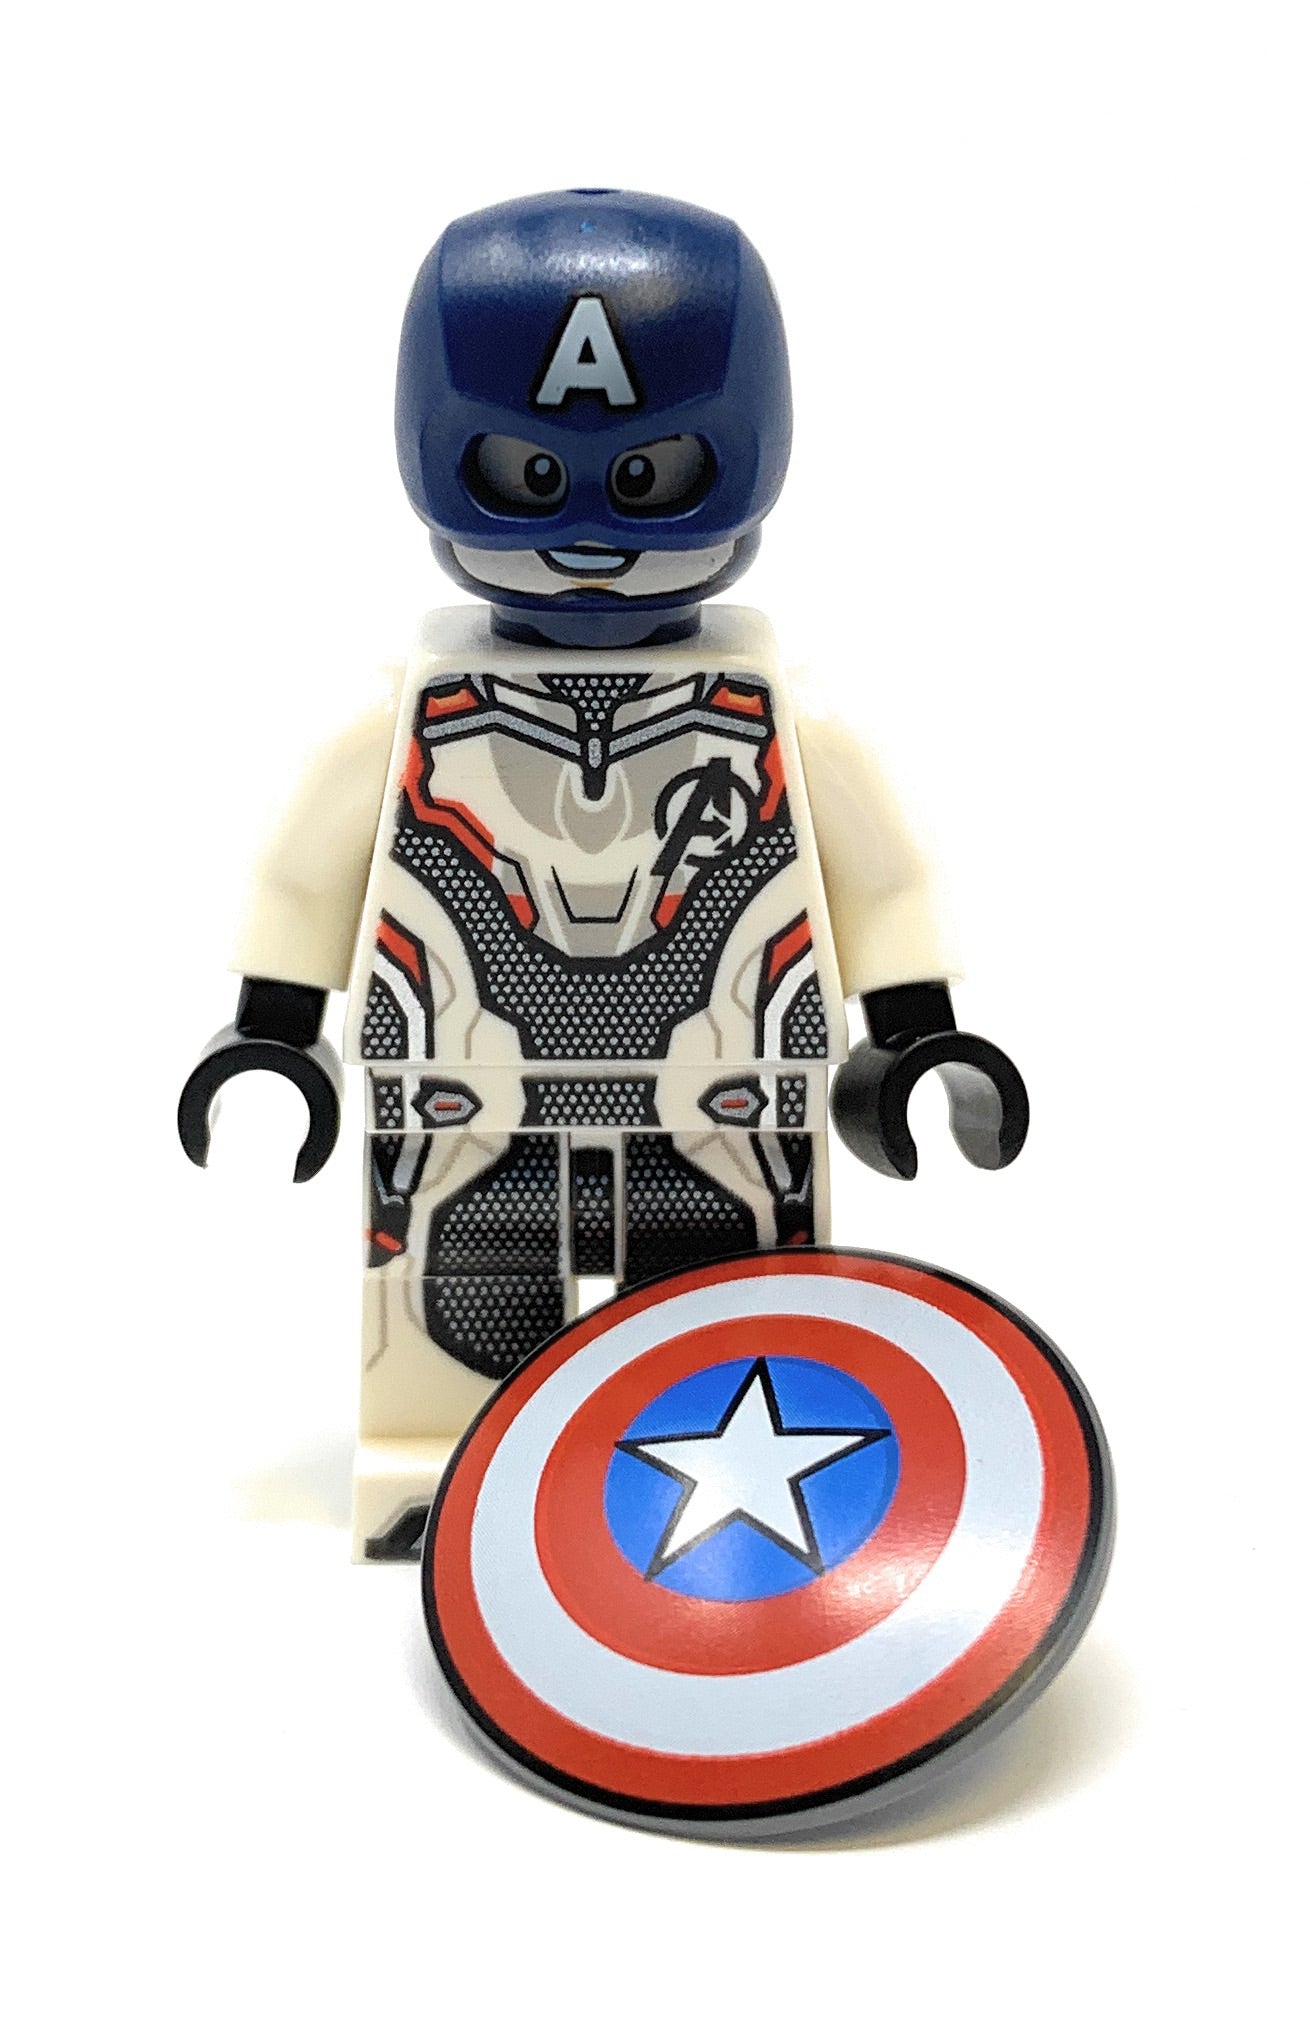 Captain America (Endgame) - LEGO Marvel Minifigure (2019)